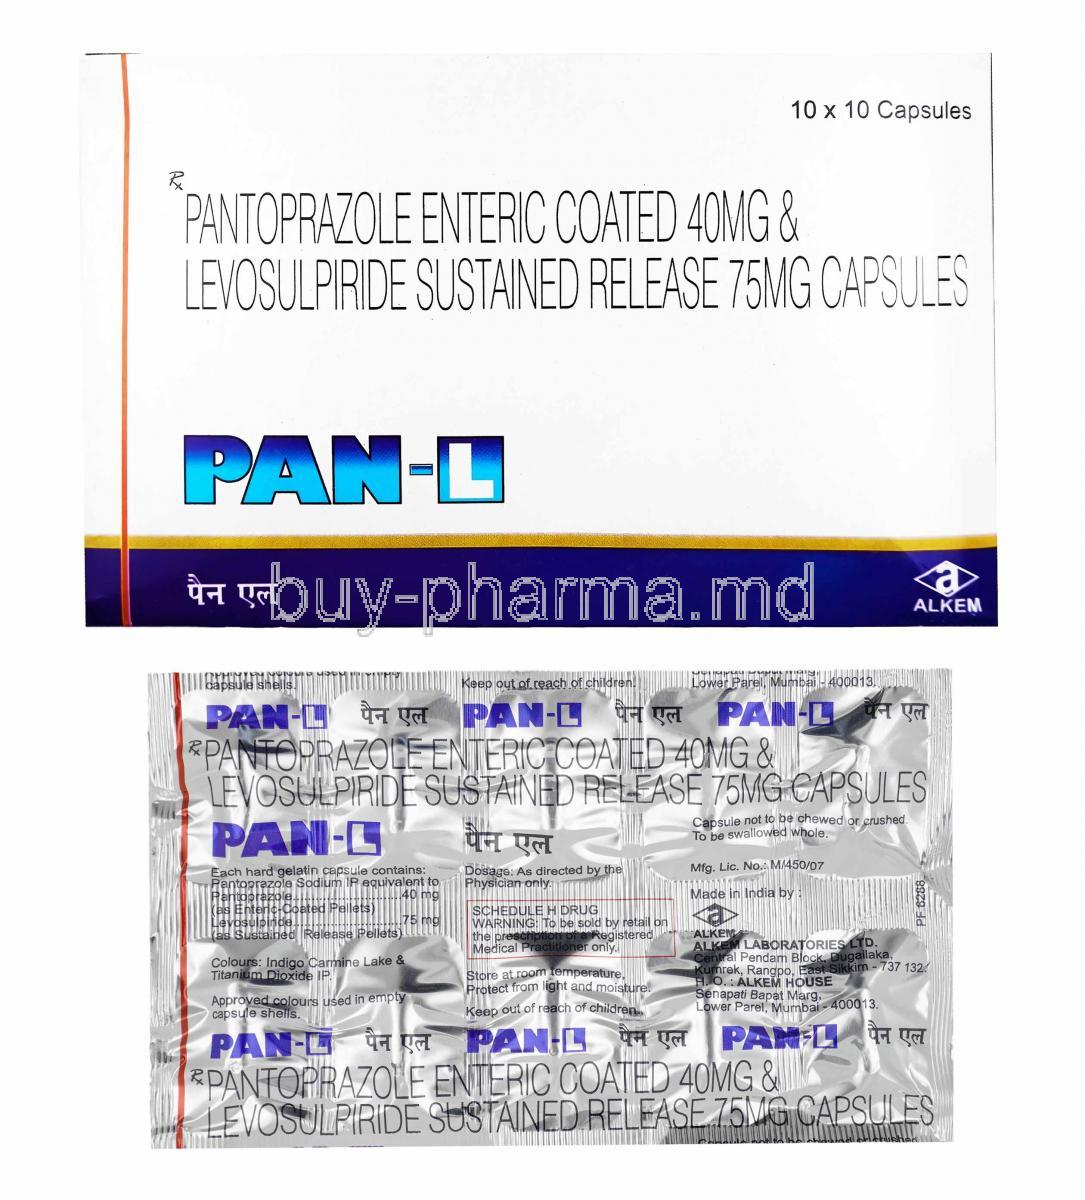 PAN L, Levosulpiride and Pantoprazole tablets and box